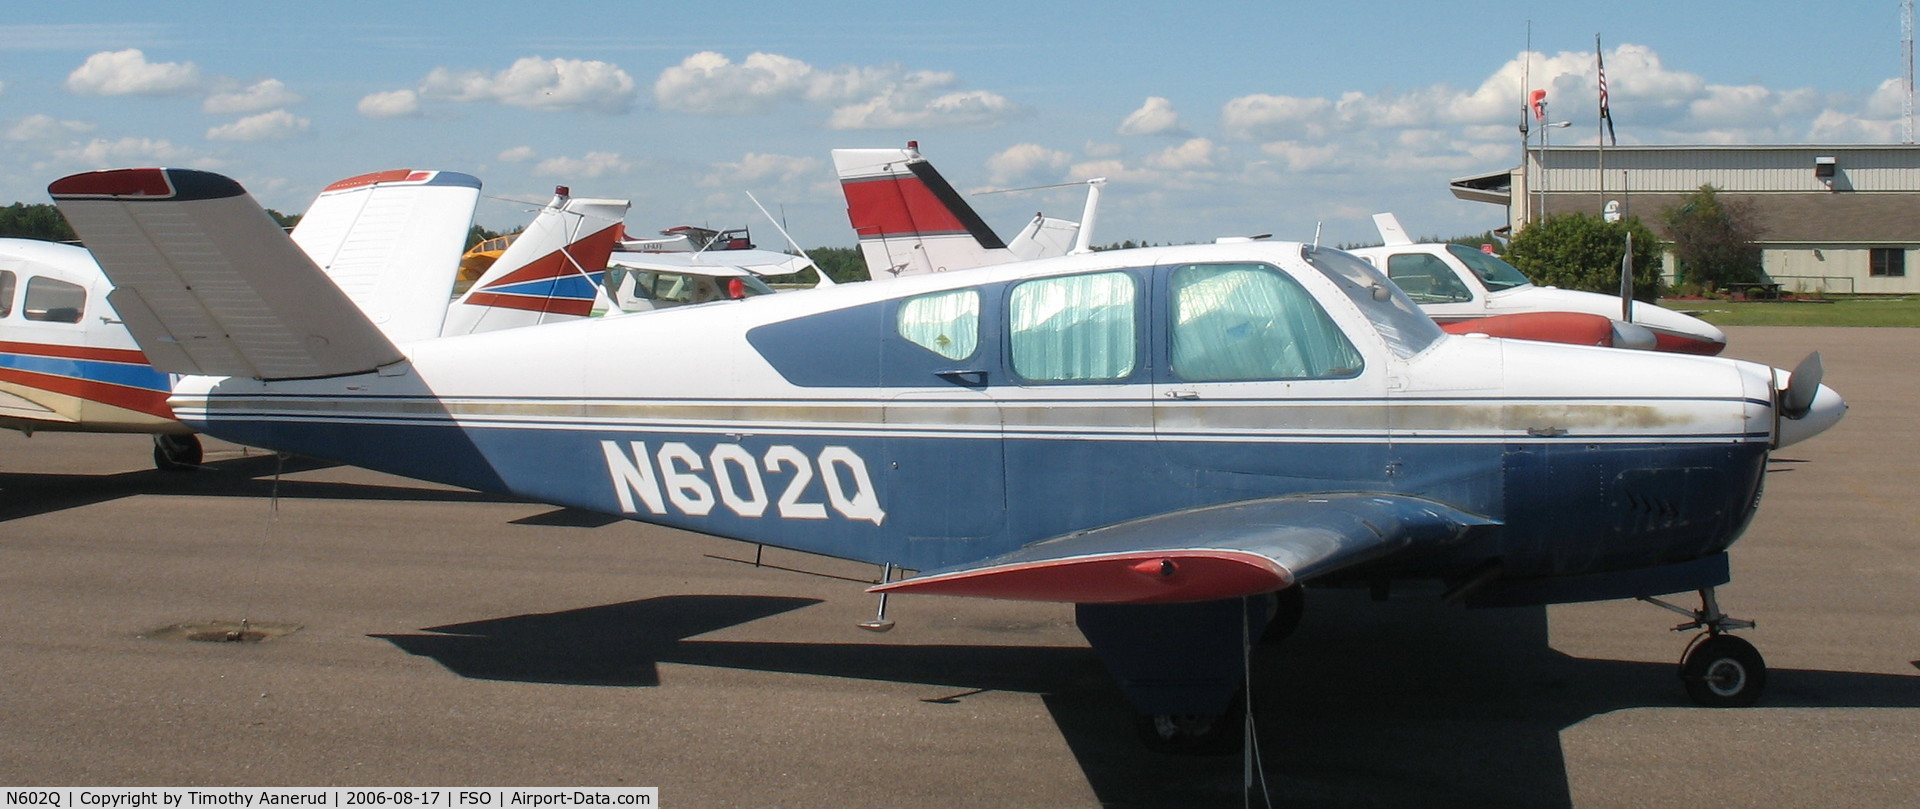 N602Q, 1959 Beech K35 Bonanza C/N D-5825, Tied down at the Franklin County State Airport, Highgate, VT